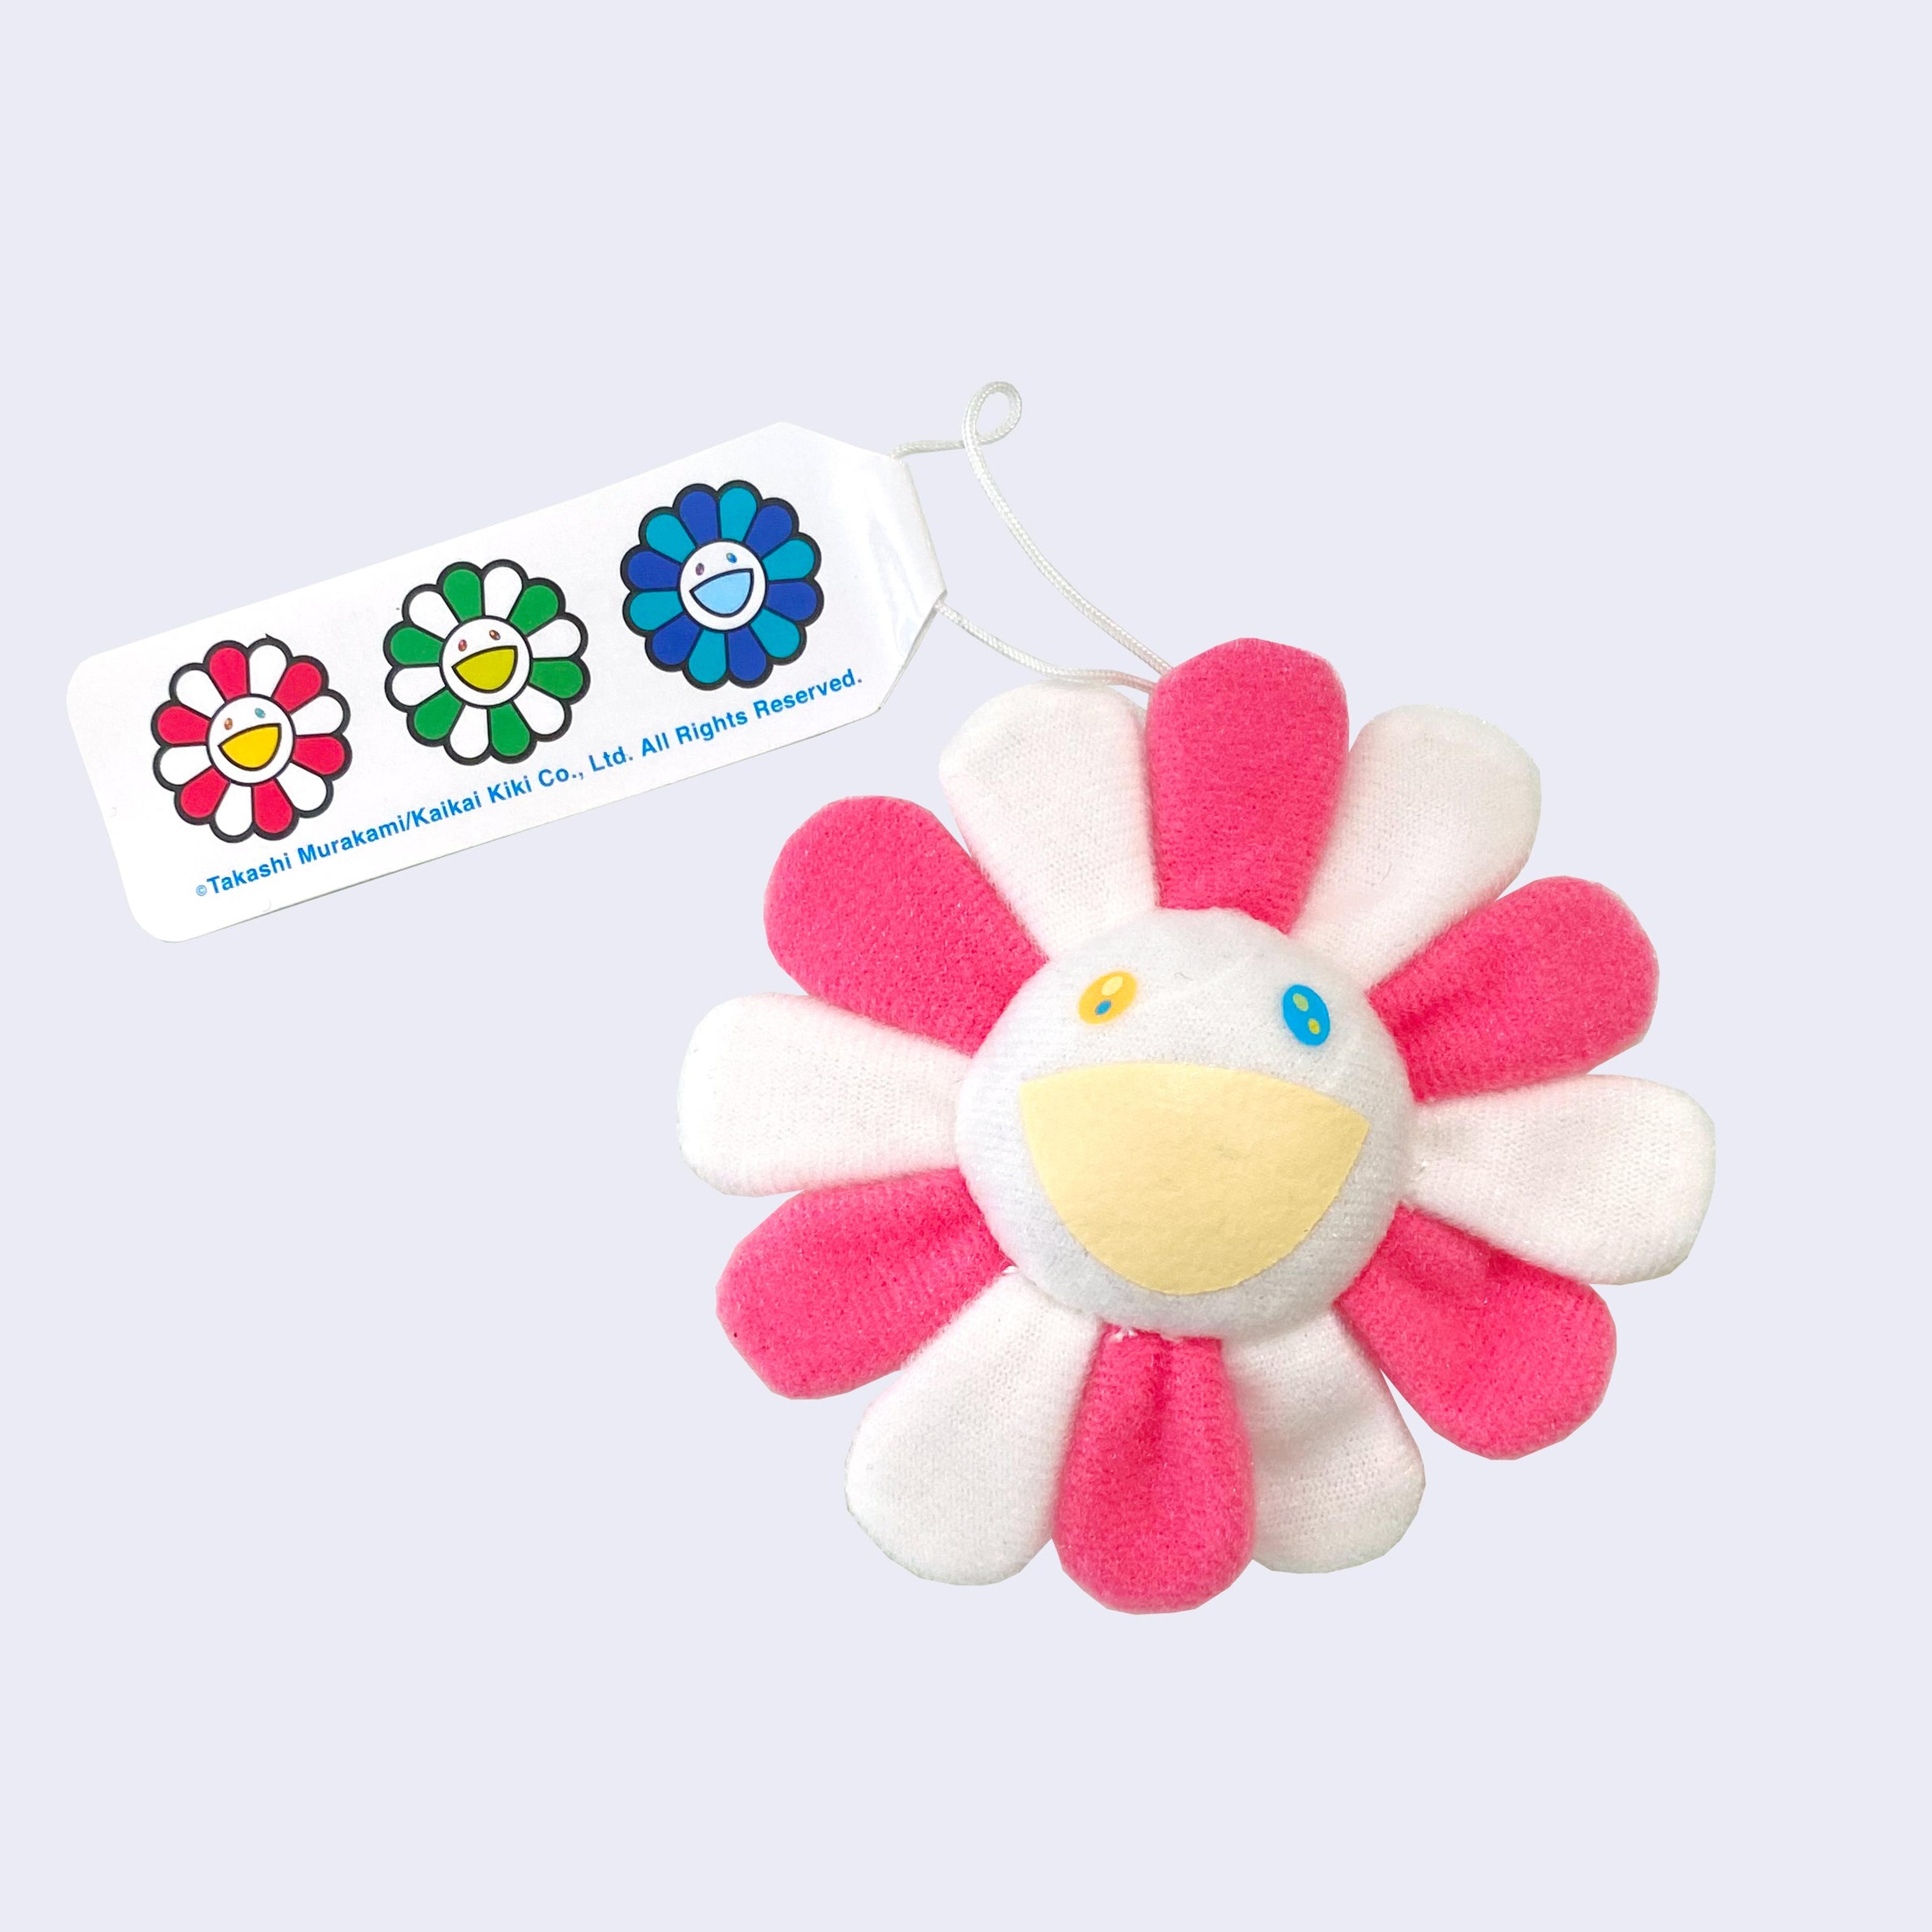 Takashi Murakami Flower Keychain 